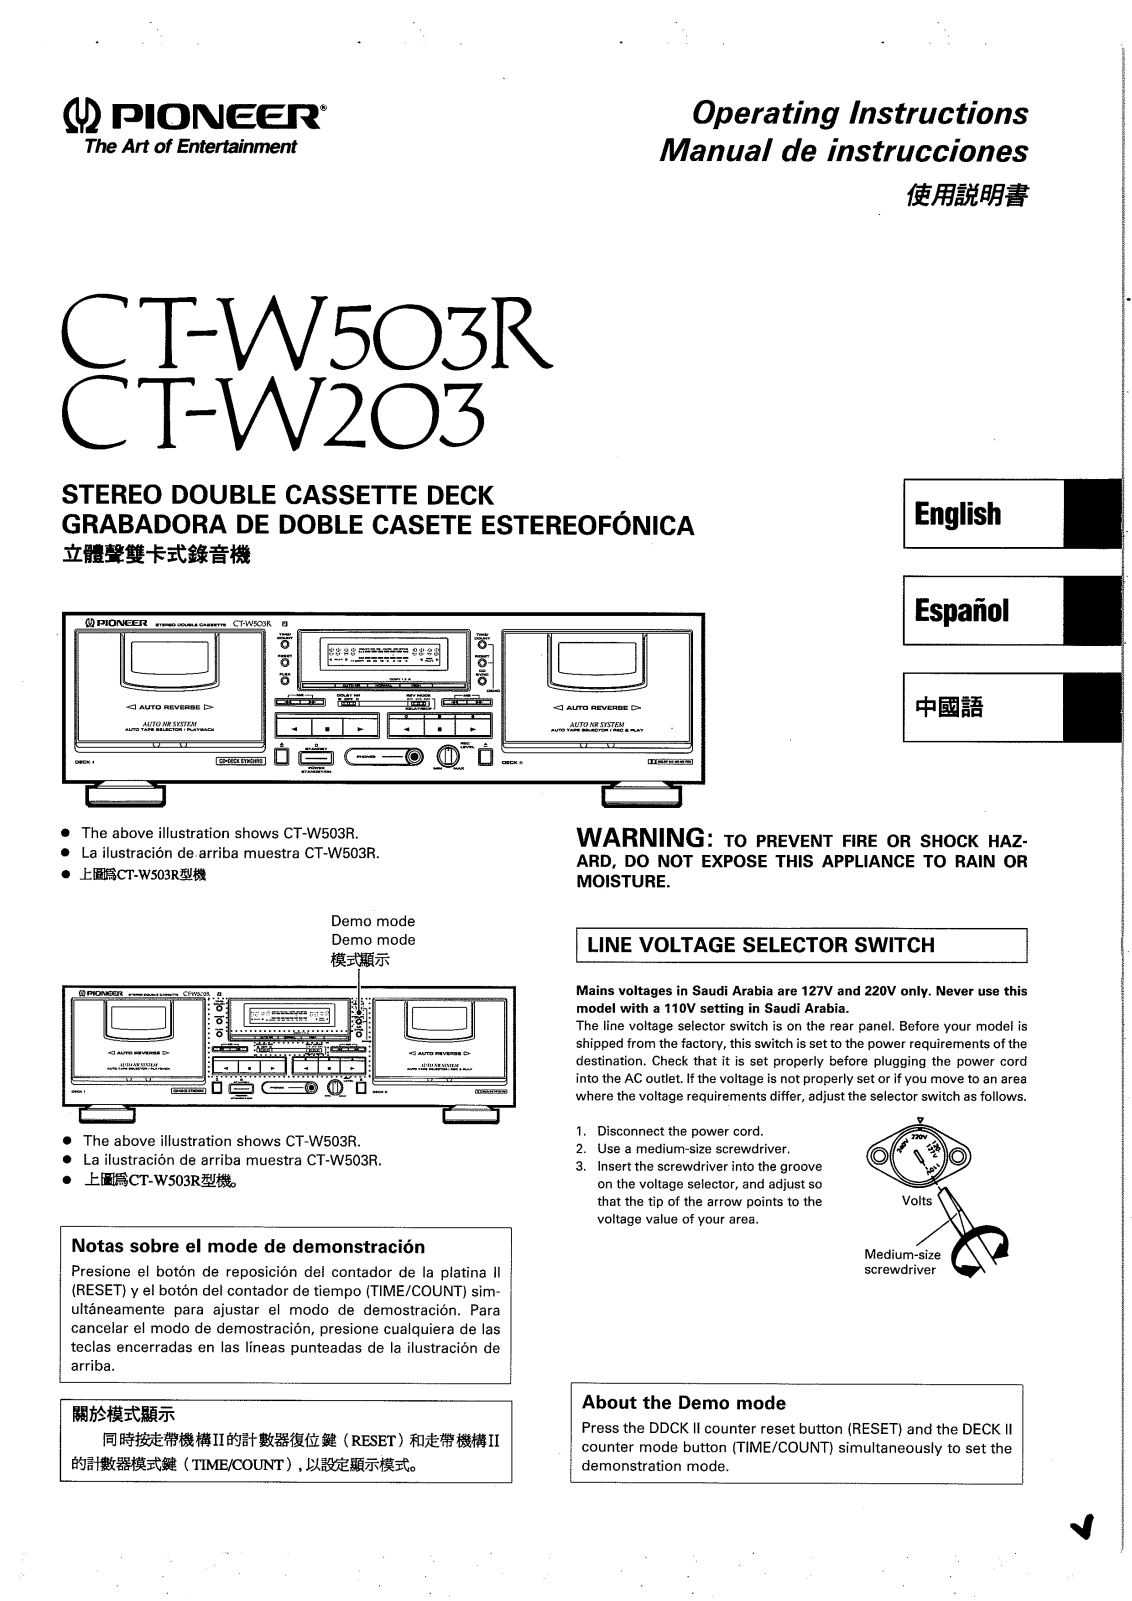 Pioneer CT-W503R, CT-W203 Manual